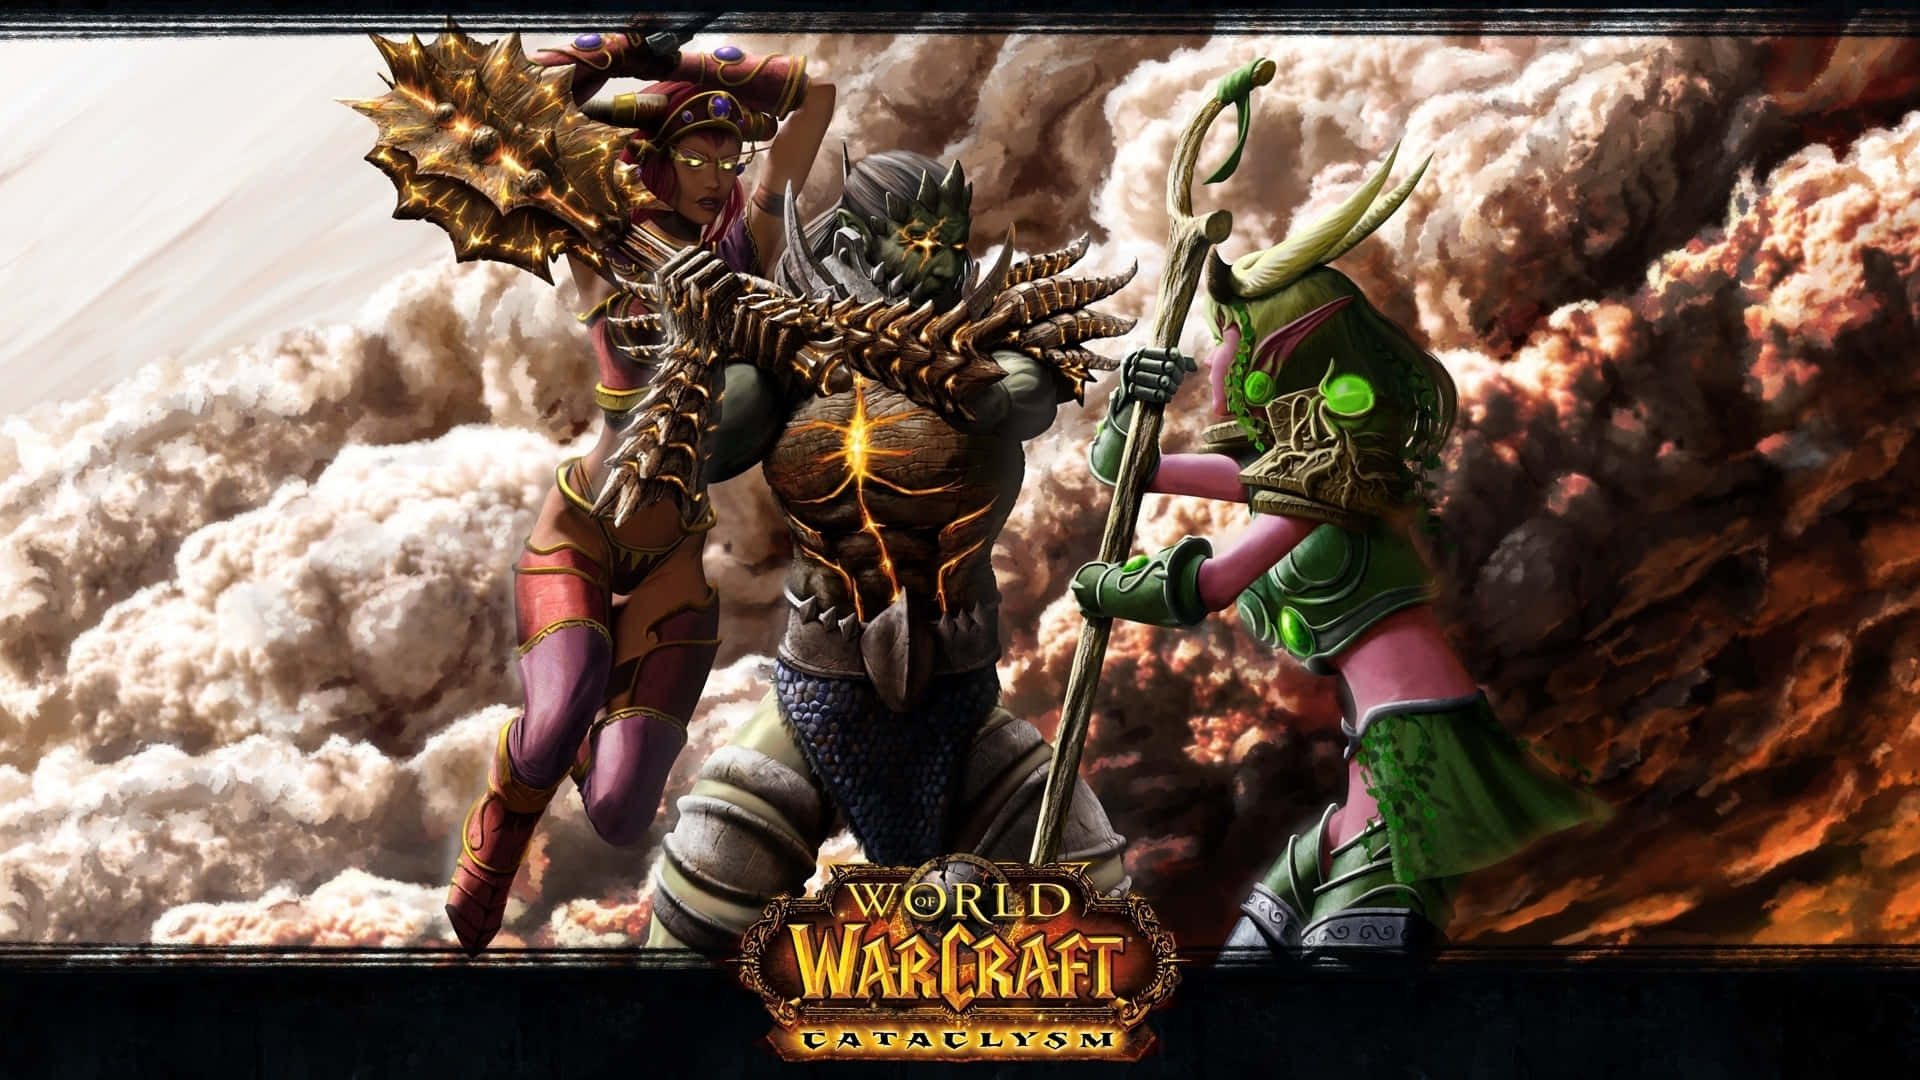 Immersive Adventure Awaits in World of Warcraft Wallpaper